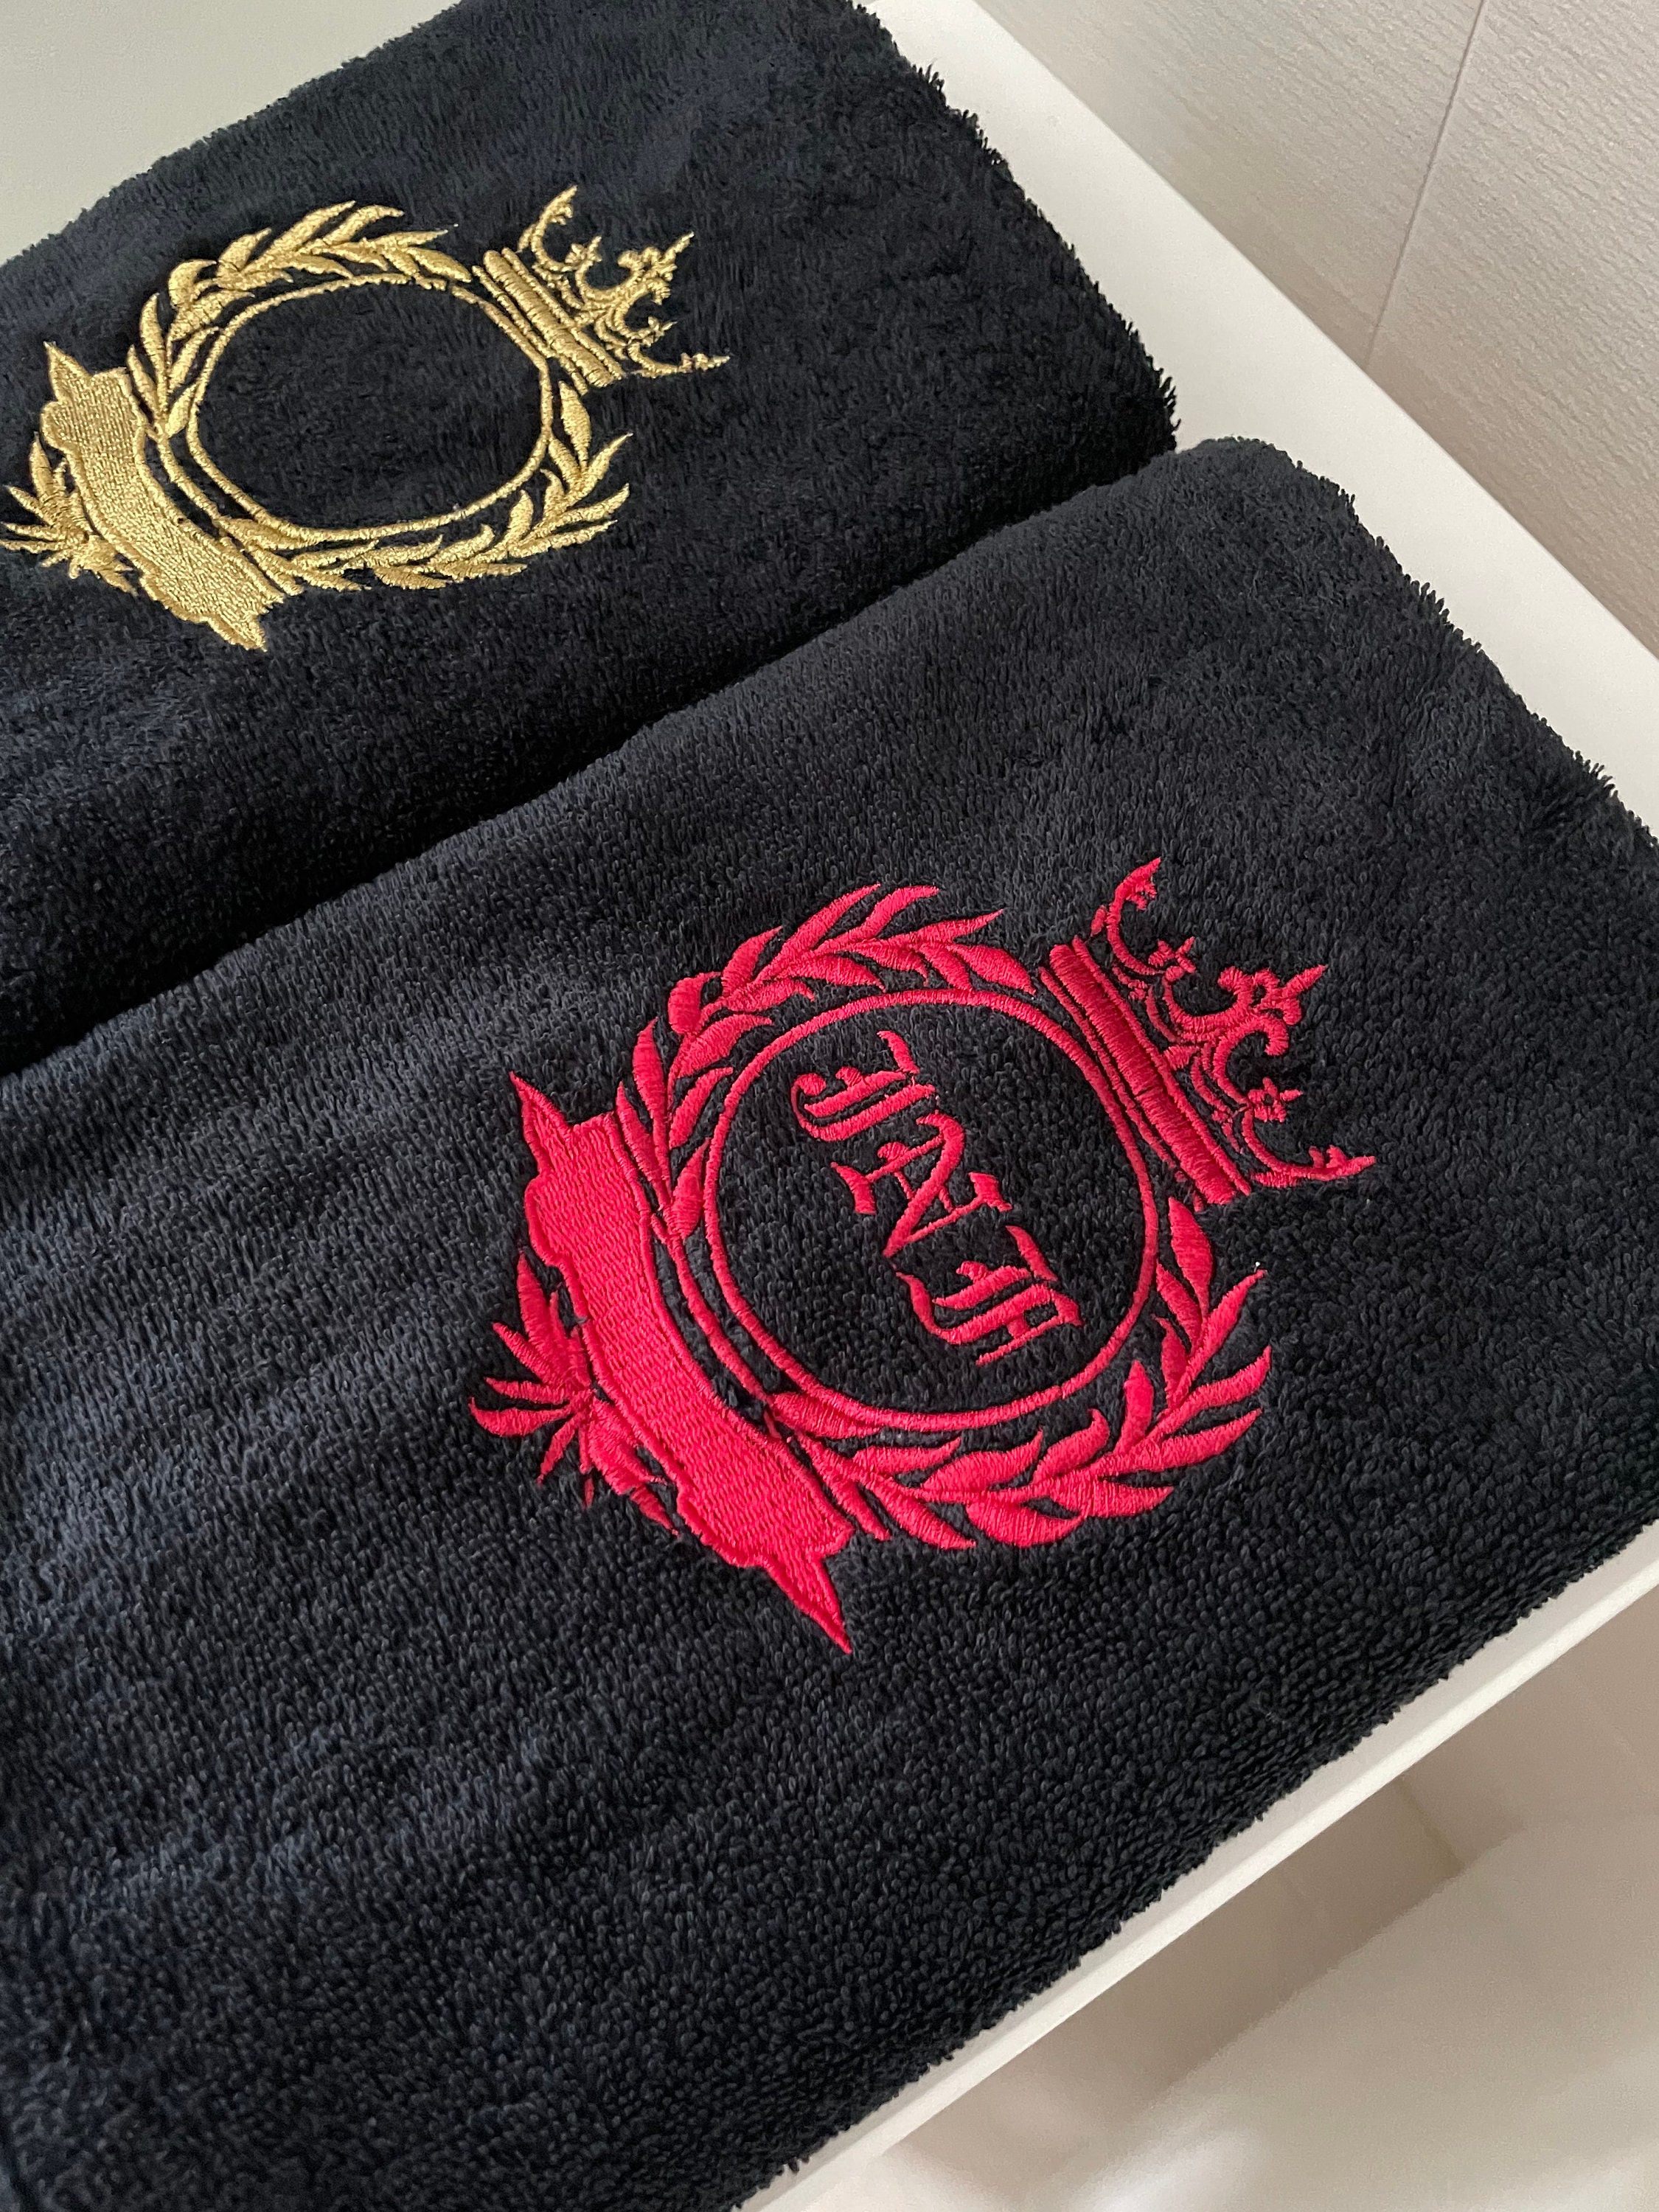 Gothic monogram skull and heraldry shield design, bath towel set